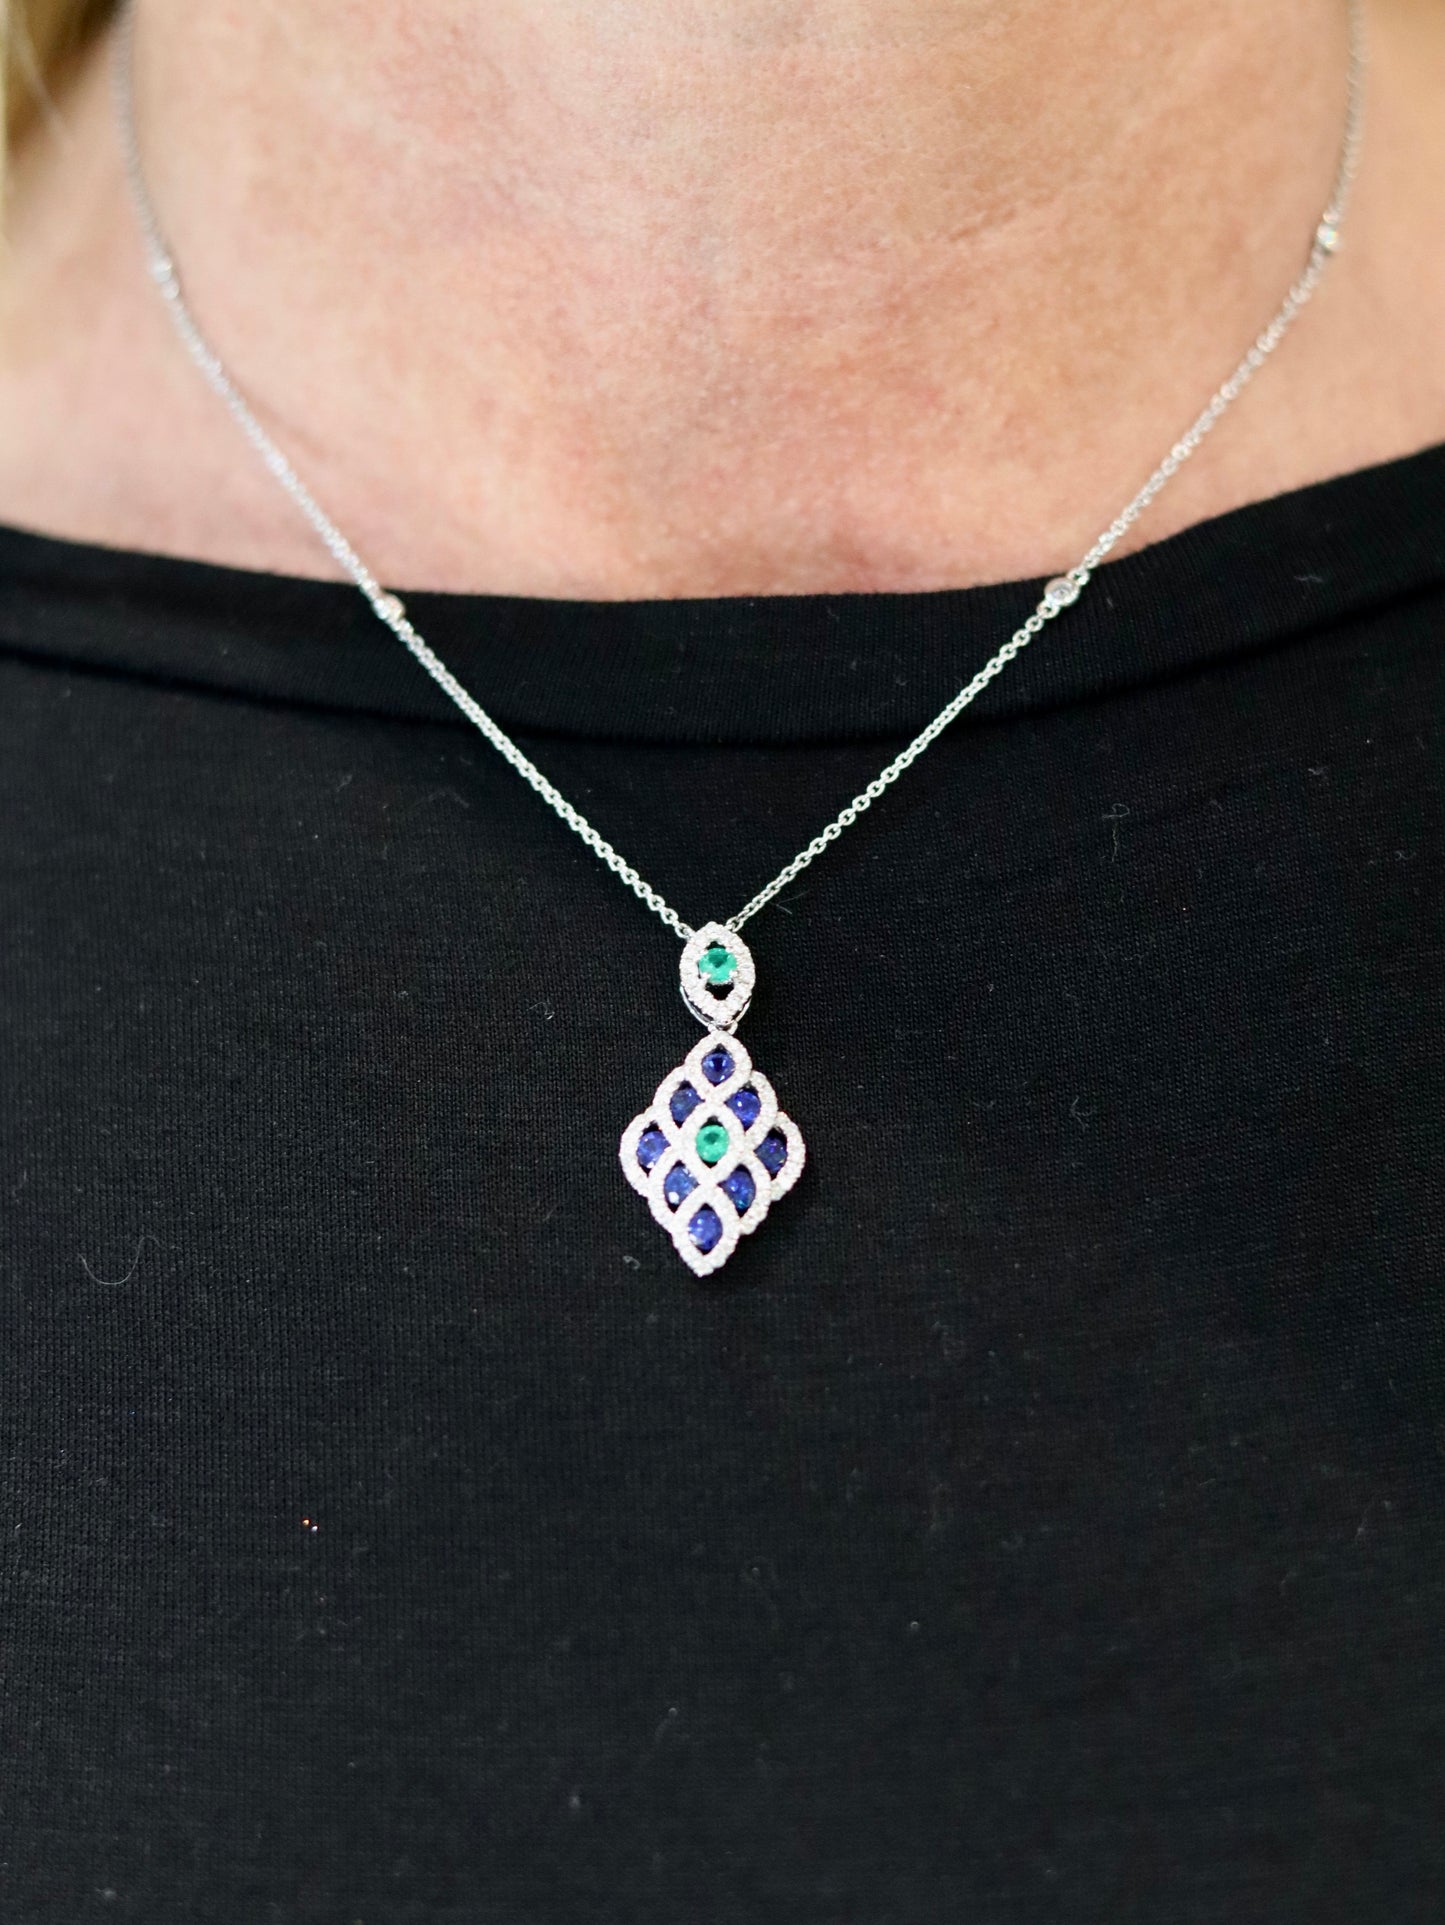 18ct Sapphire Emerald and Diamond Pendant